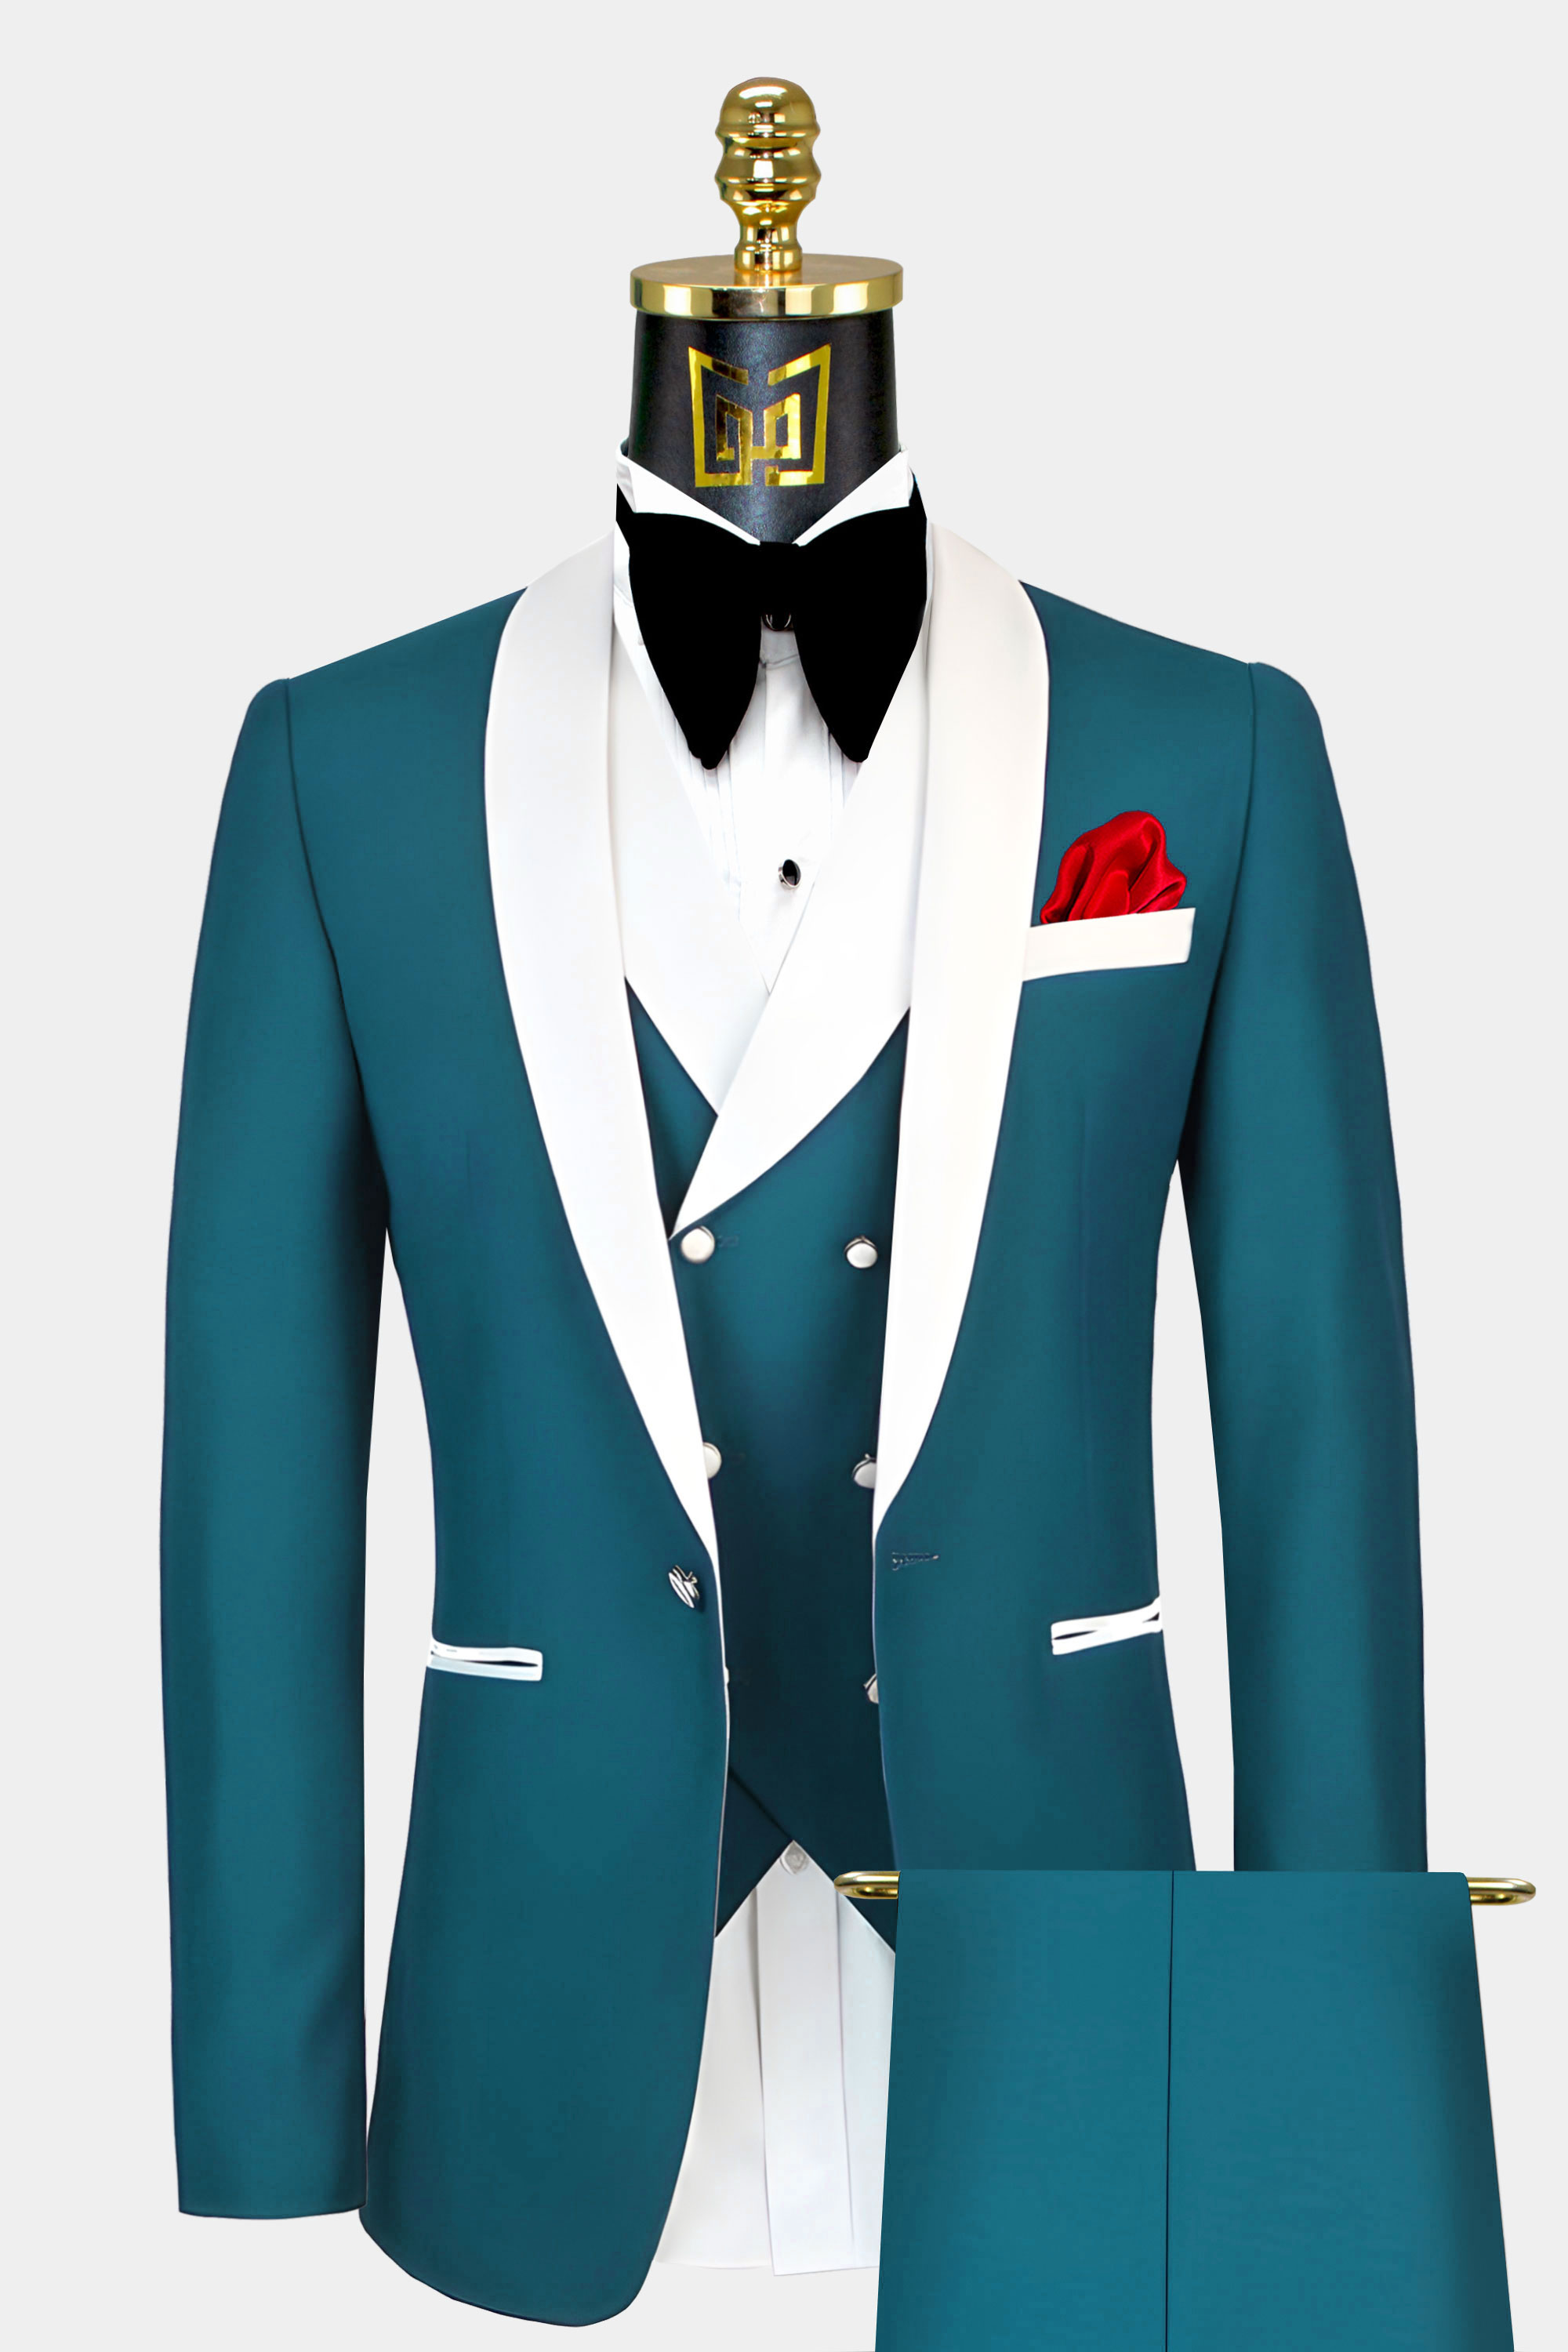 Mens-Teal-Blue-Tuxedo-with-White-Trim-Groom-Wedding-Prom-Suit-from-Gentlemansguru.com